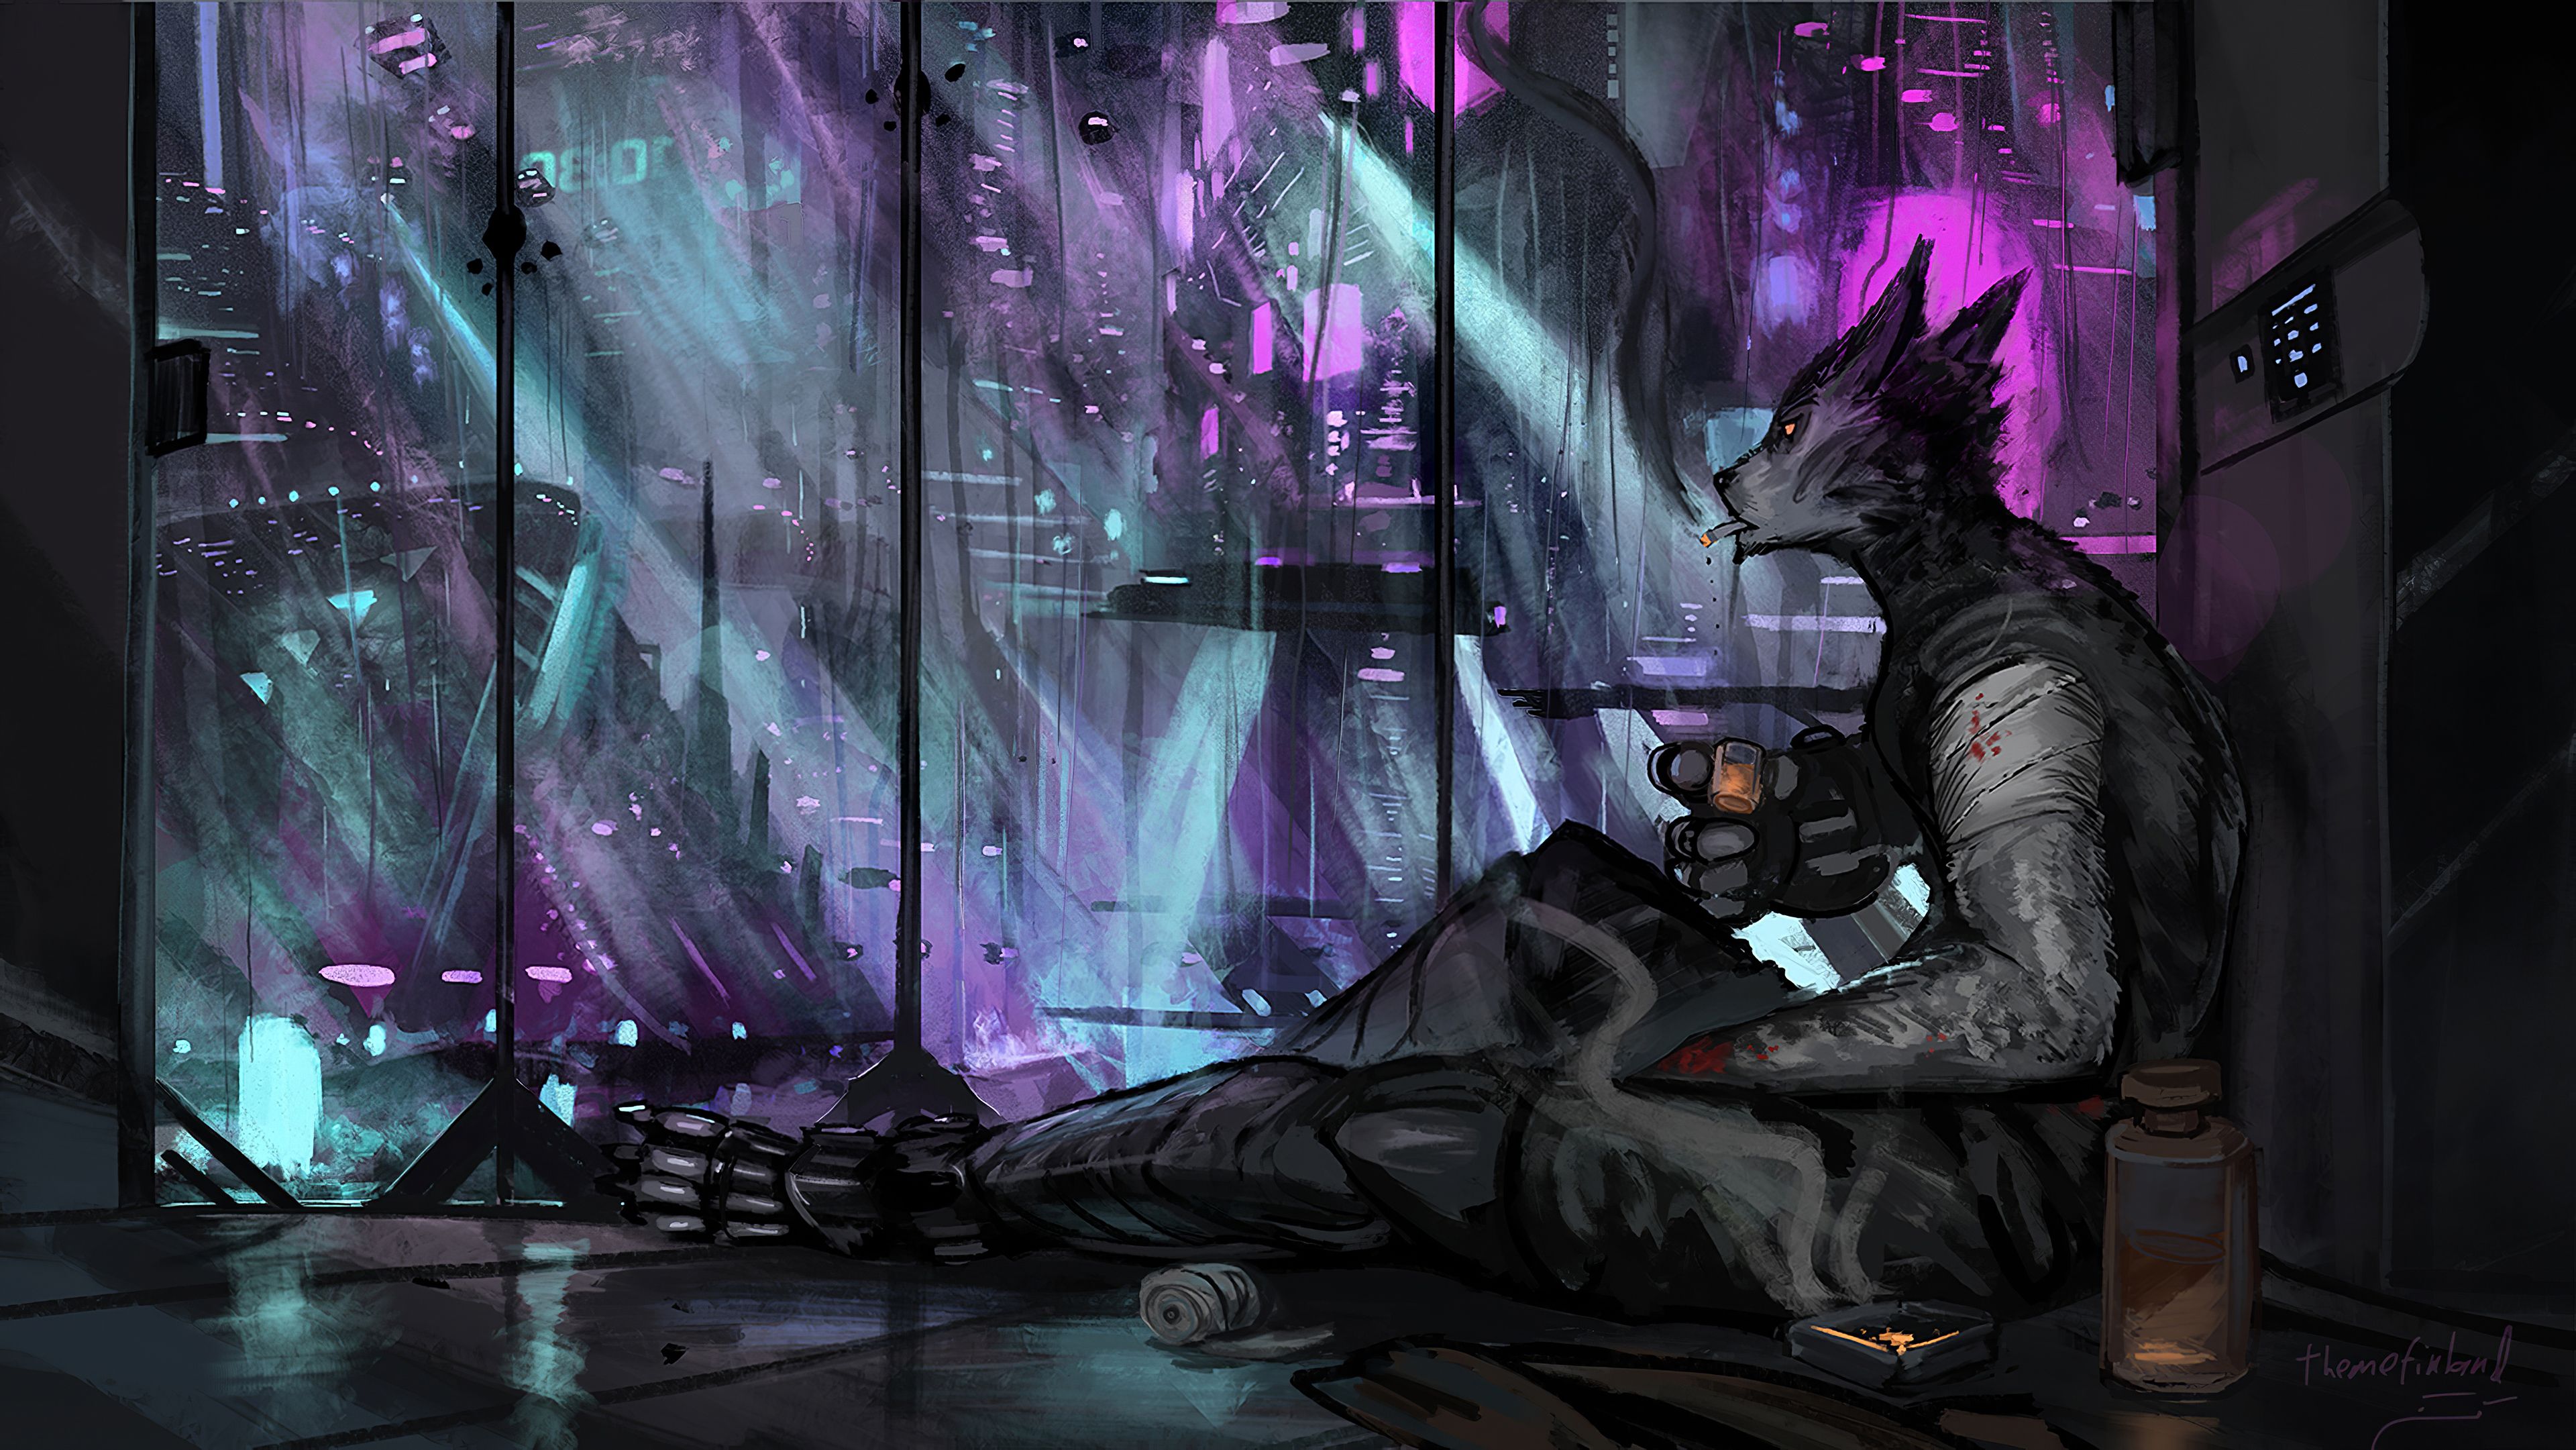 Warrior Scifi Neon Rain City Cyberpunk 4k, HD Artist, 4k Wallpaper, Image, Background, Photo and Picture